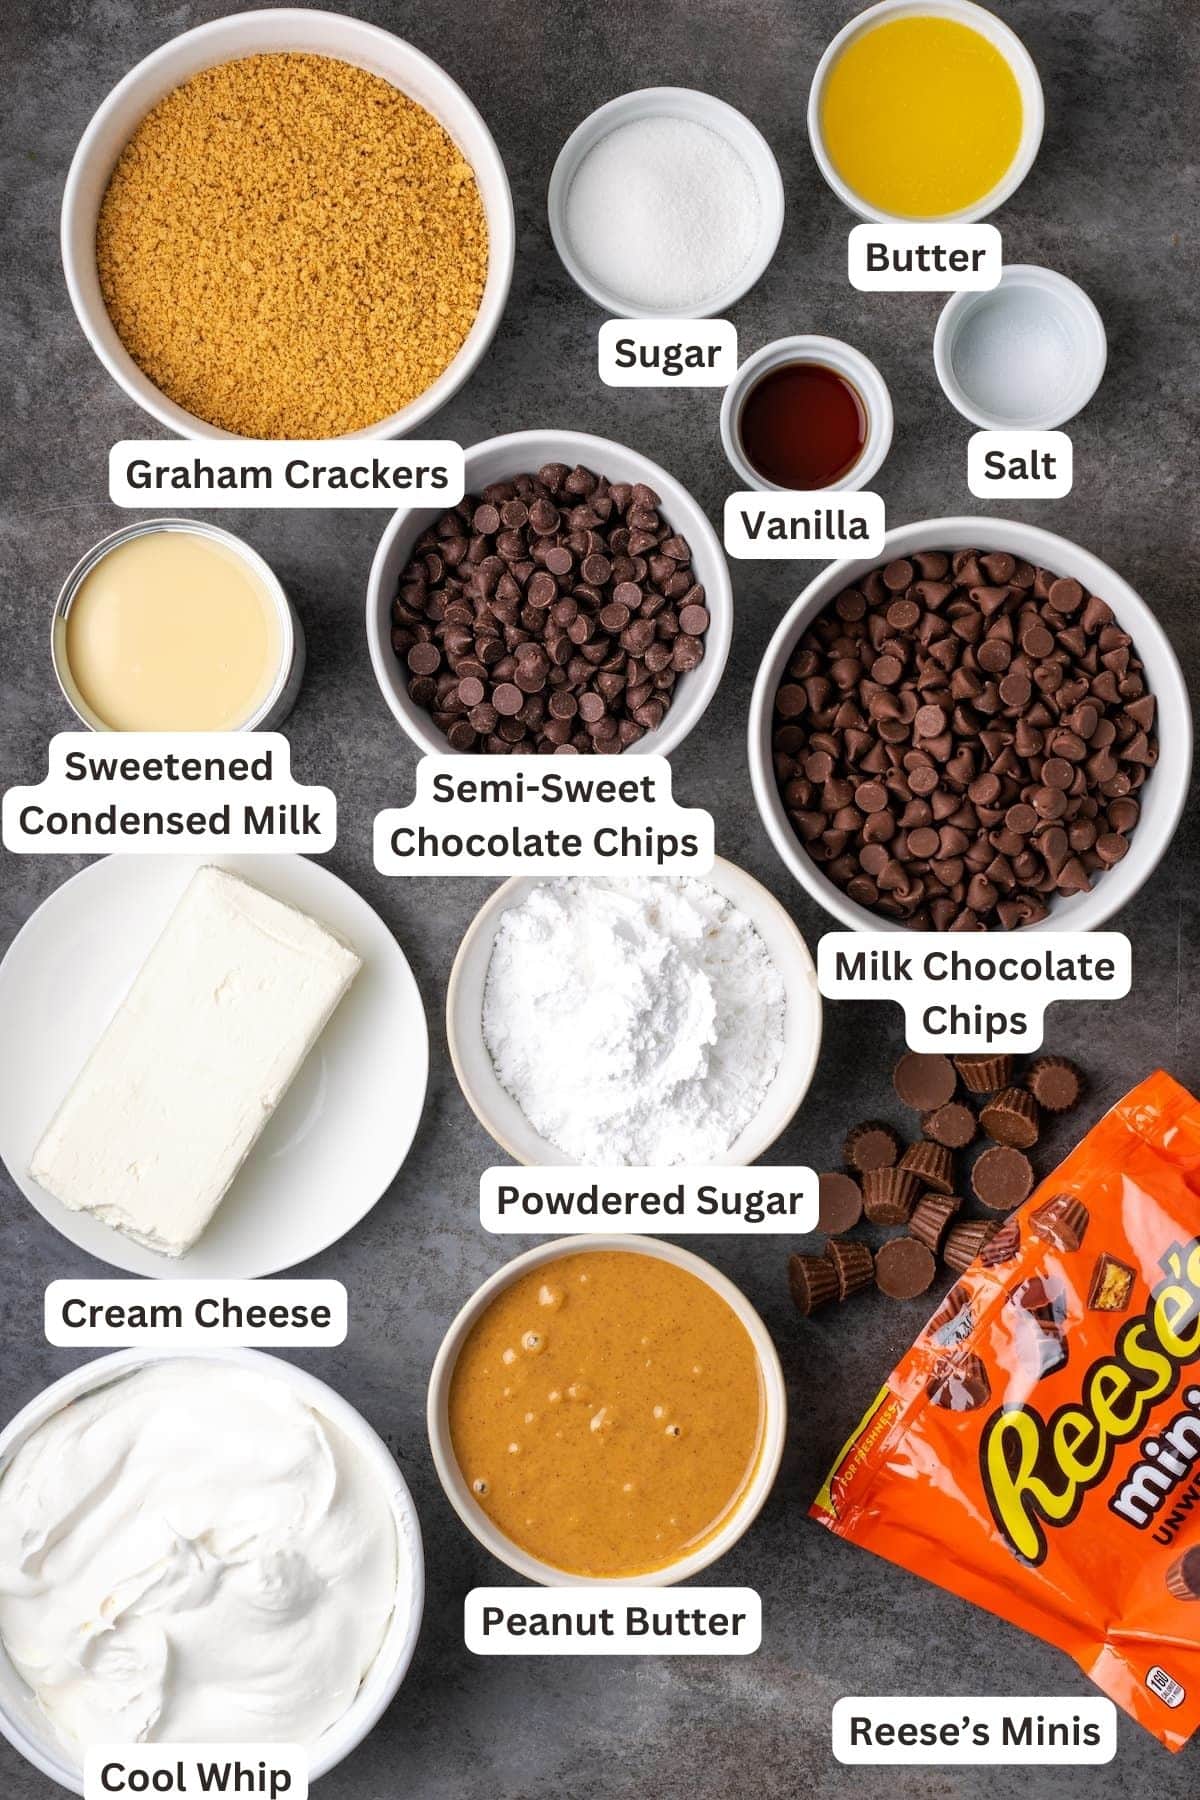 Ingredients for Reese's Fudge Pie.